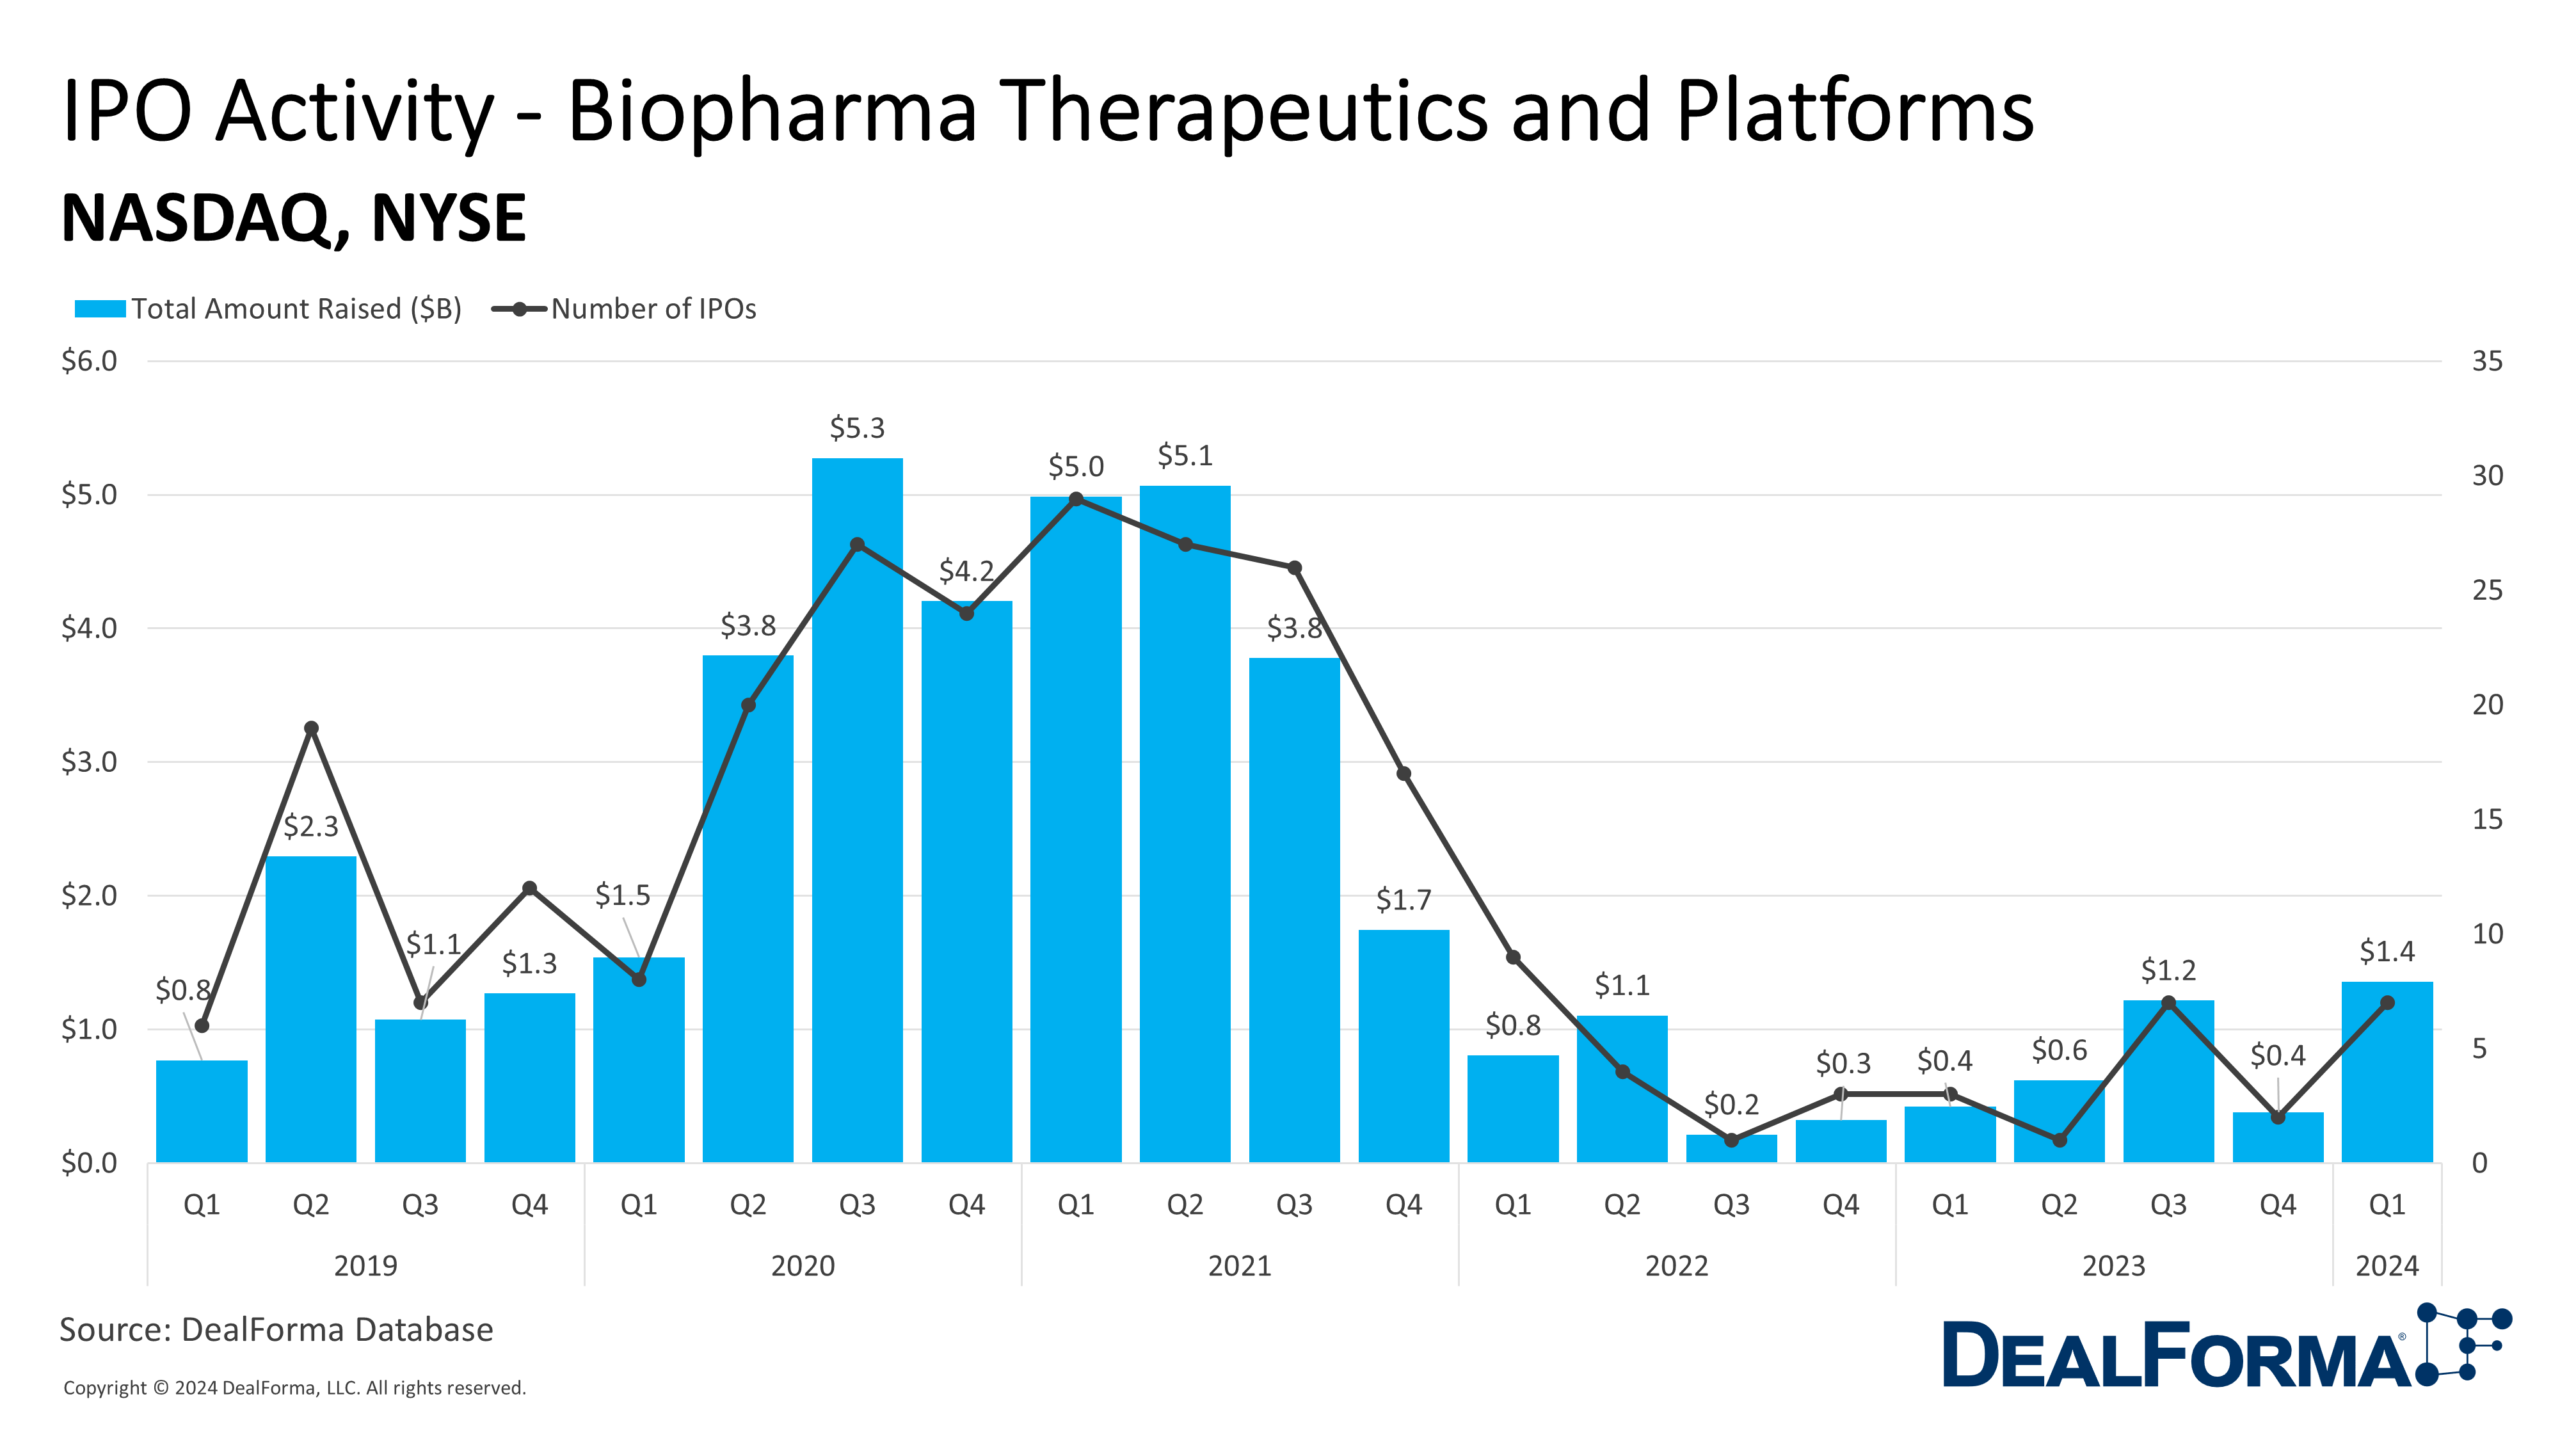 R&D Partnerships - Biopharma Tx and Platforms